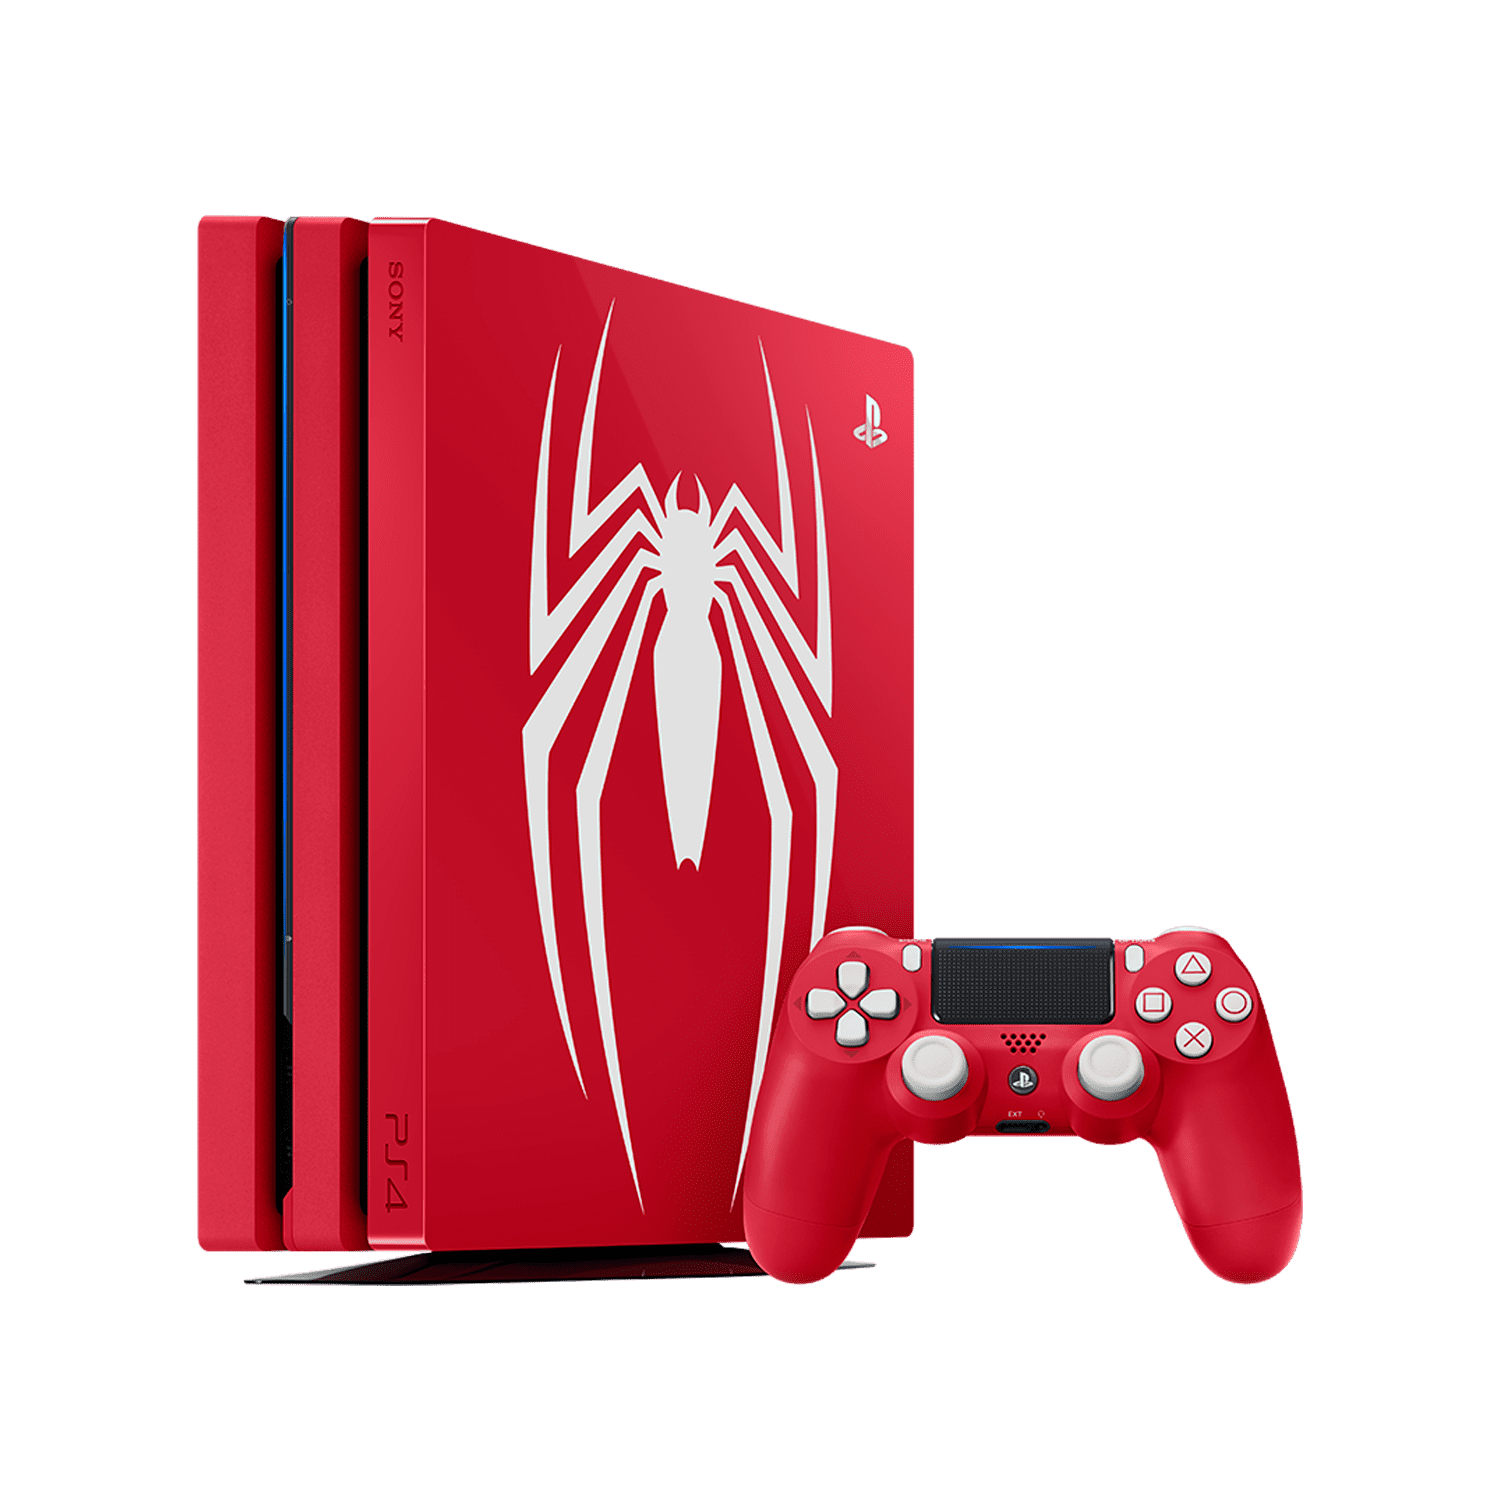 playstation 4 spiderman edition